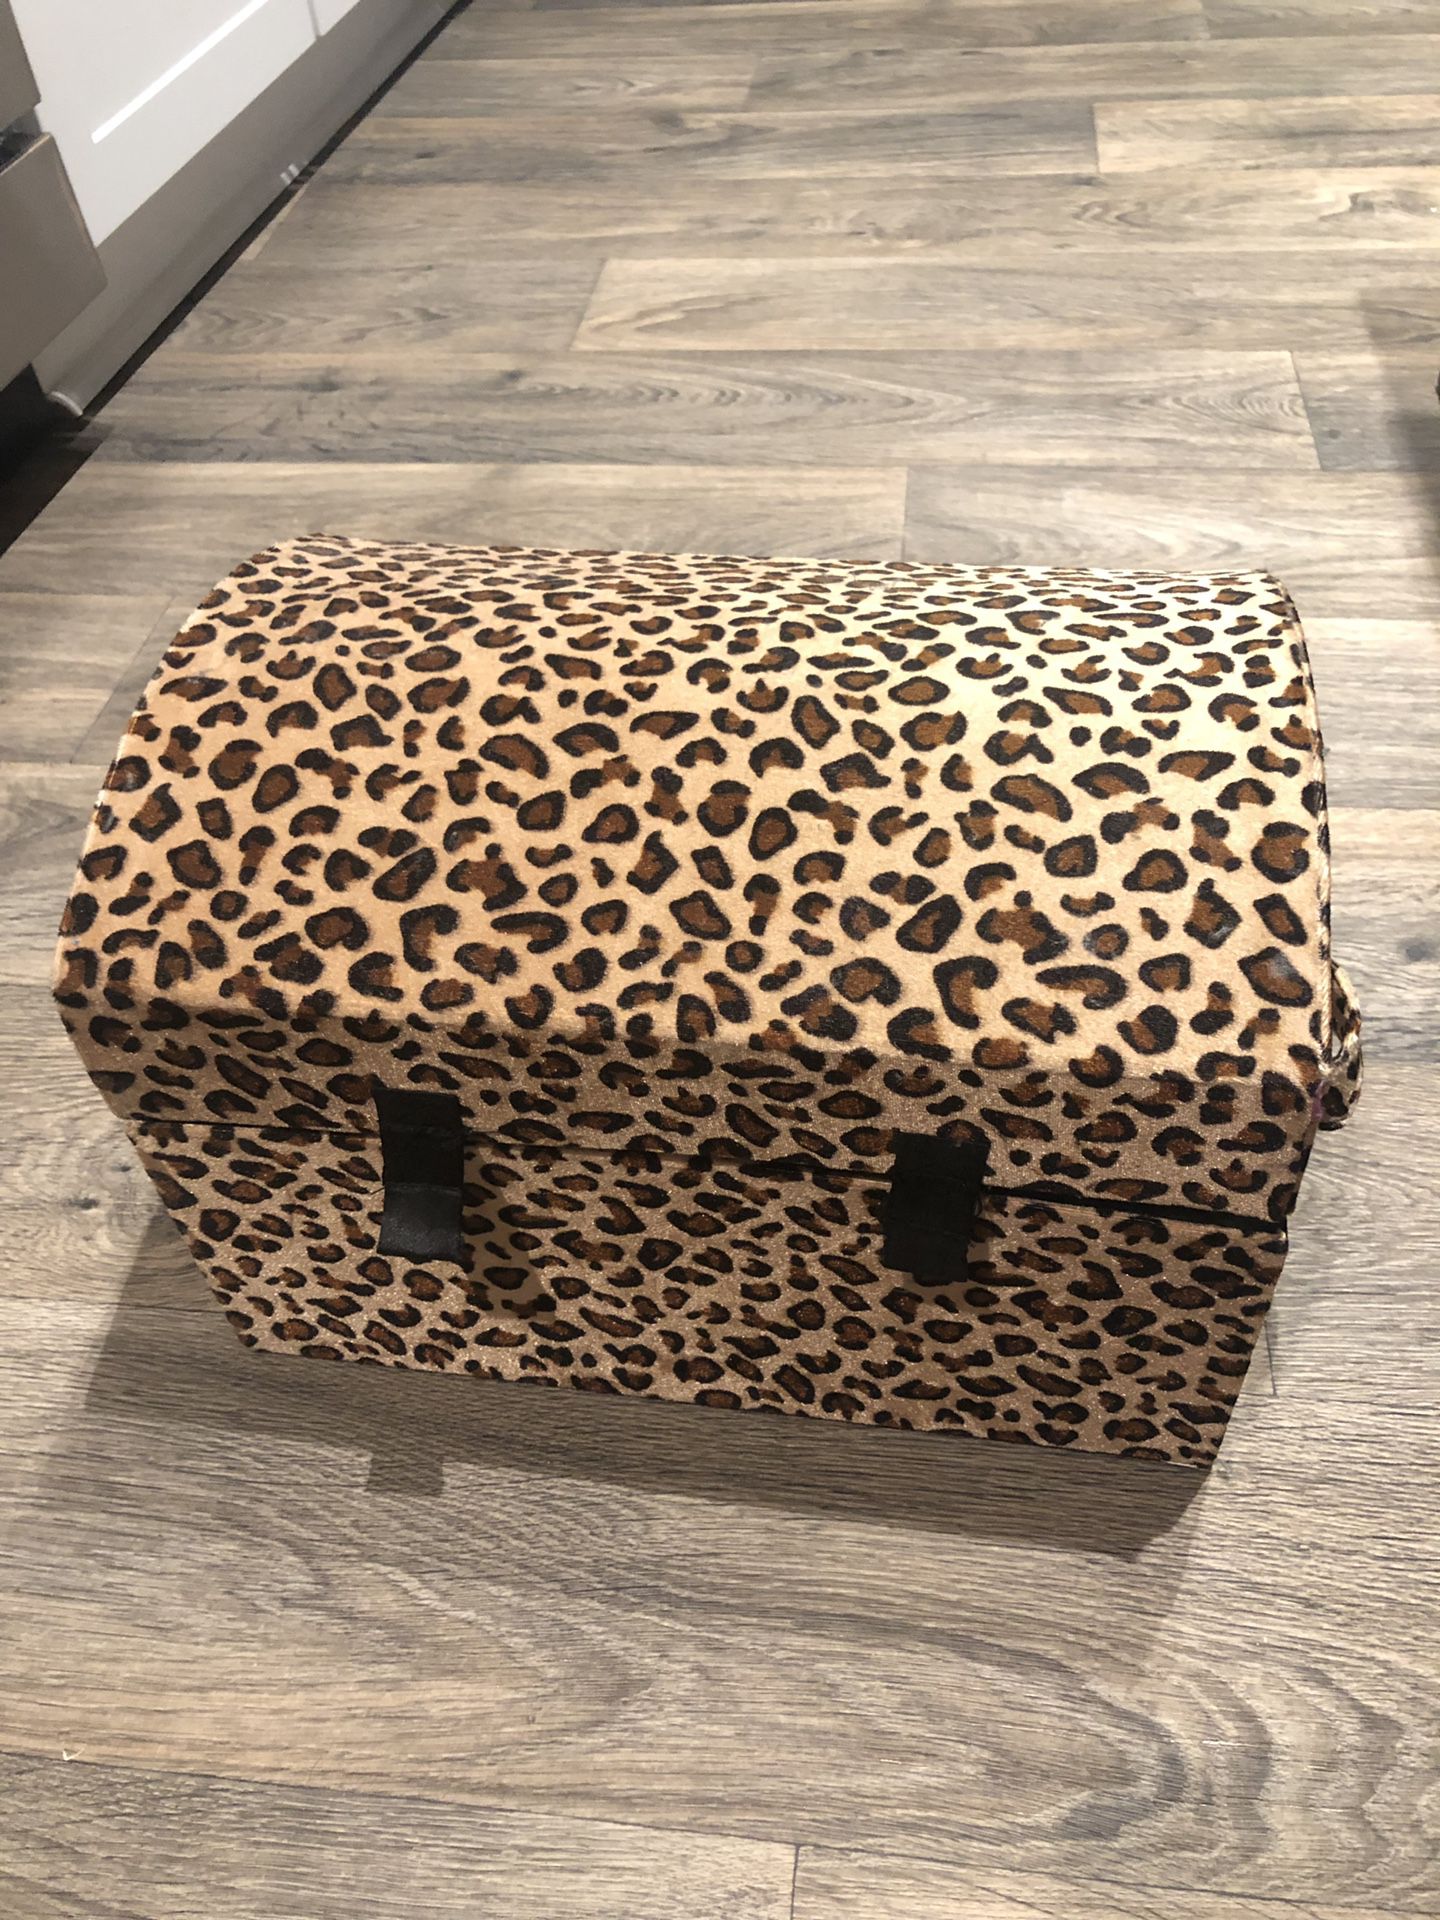 Leopard print storage container